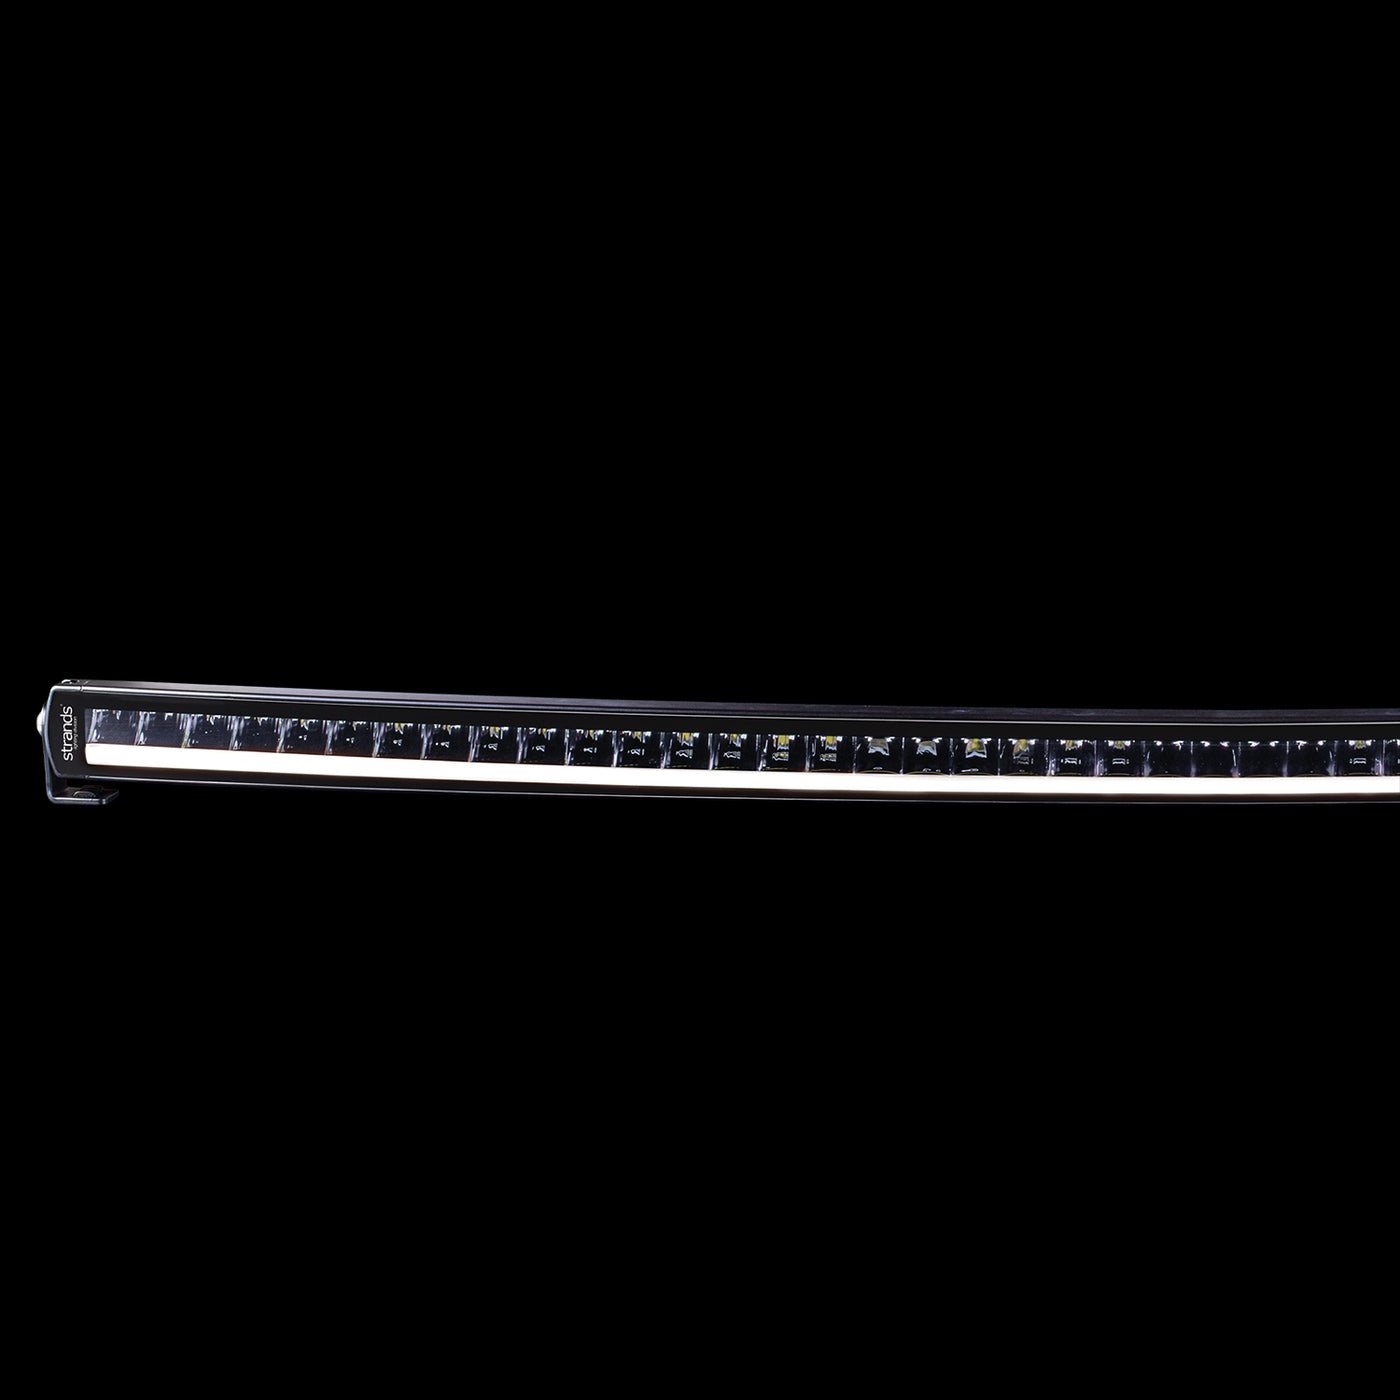 Siberia Single Row Curved 50 inch LED Light Bar